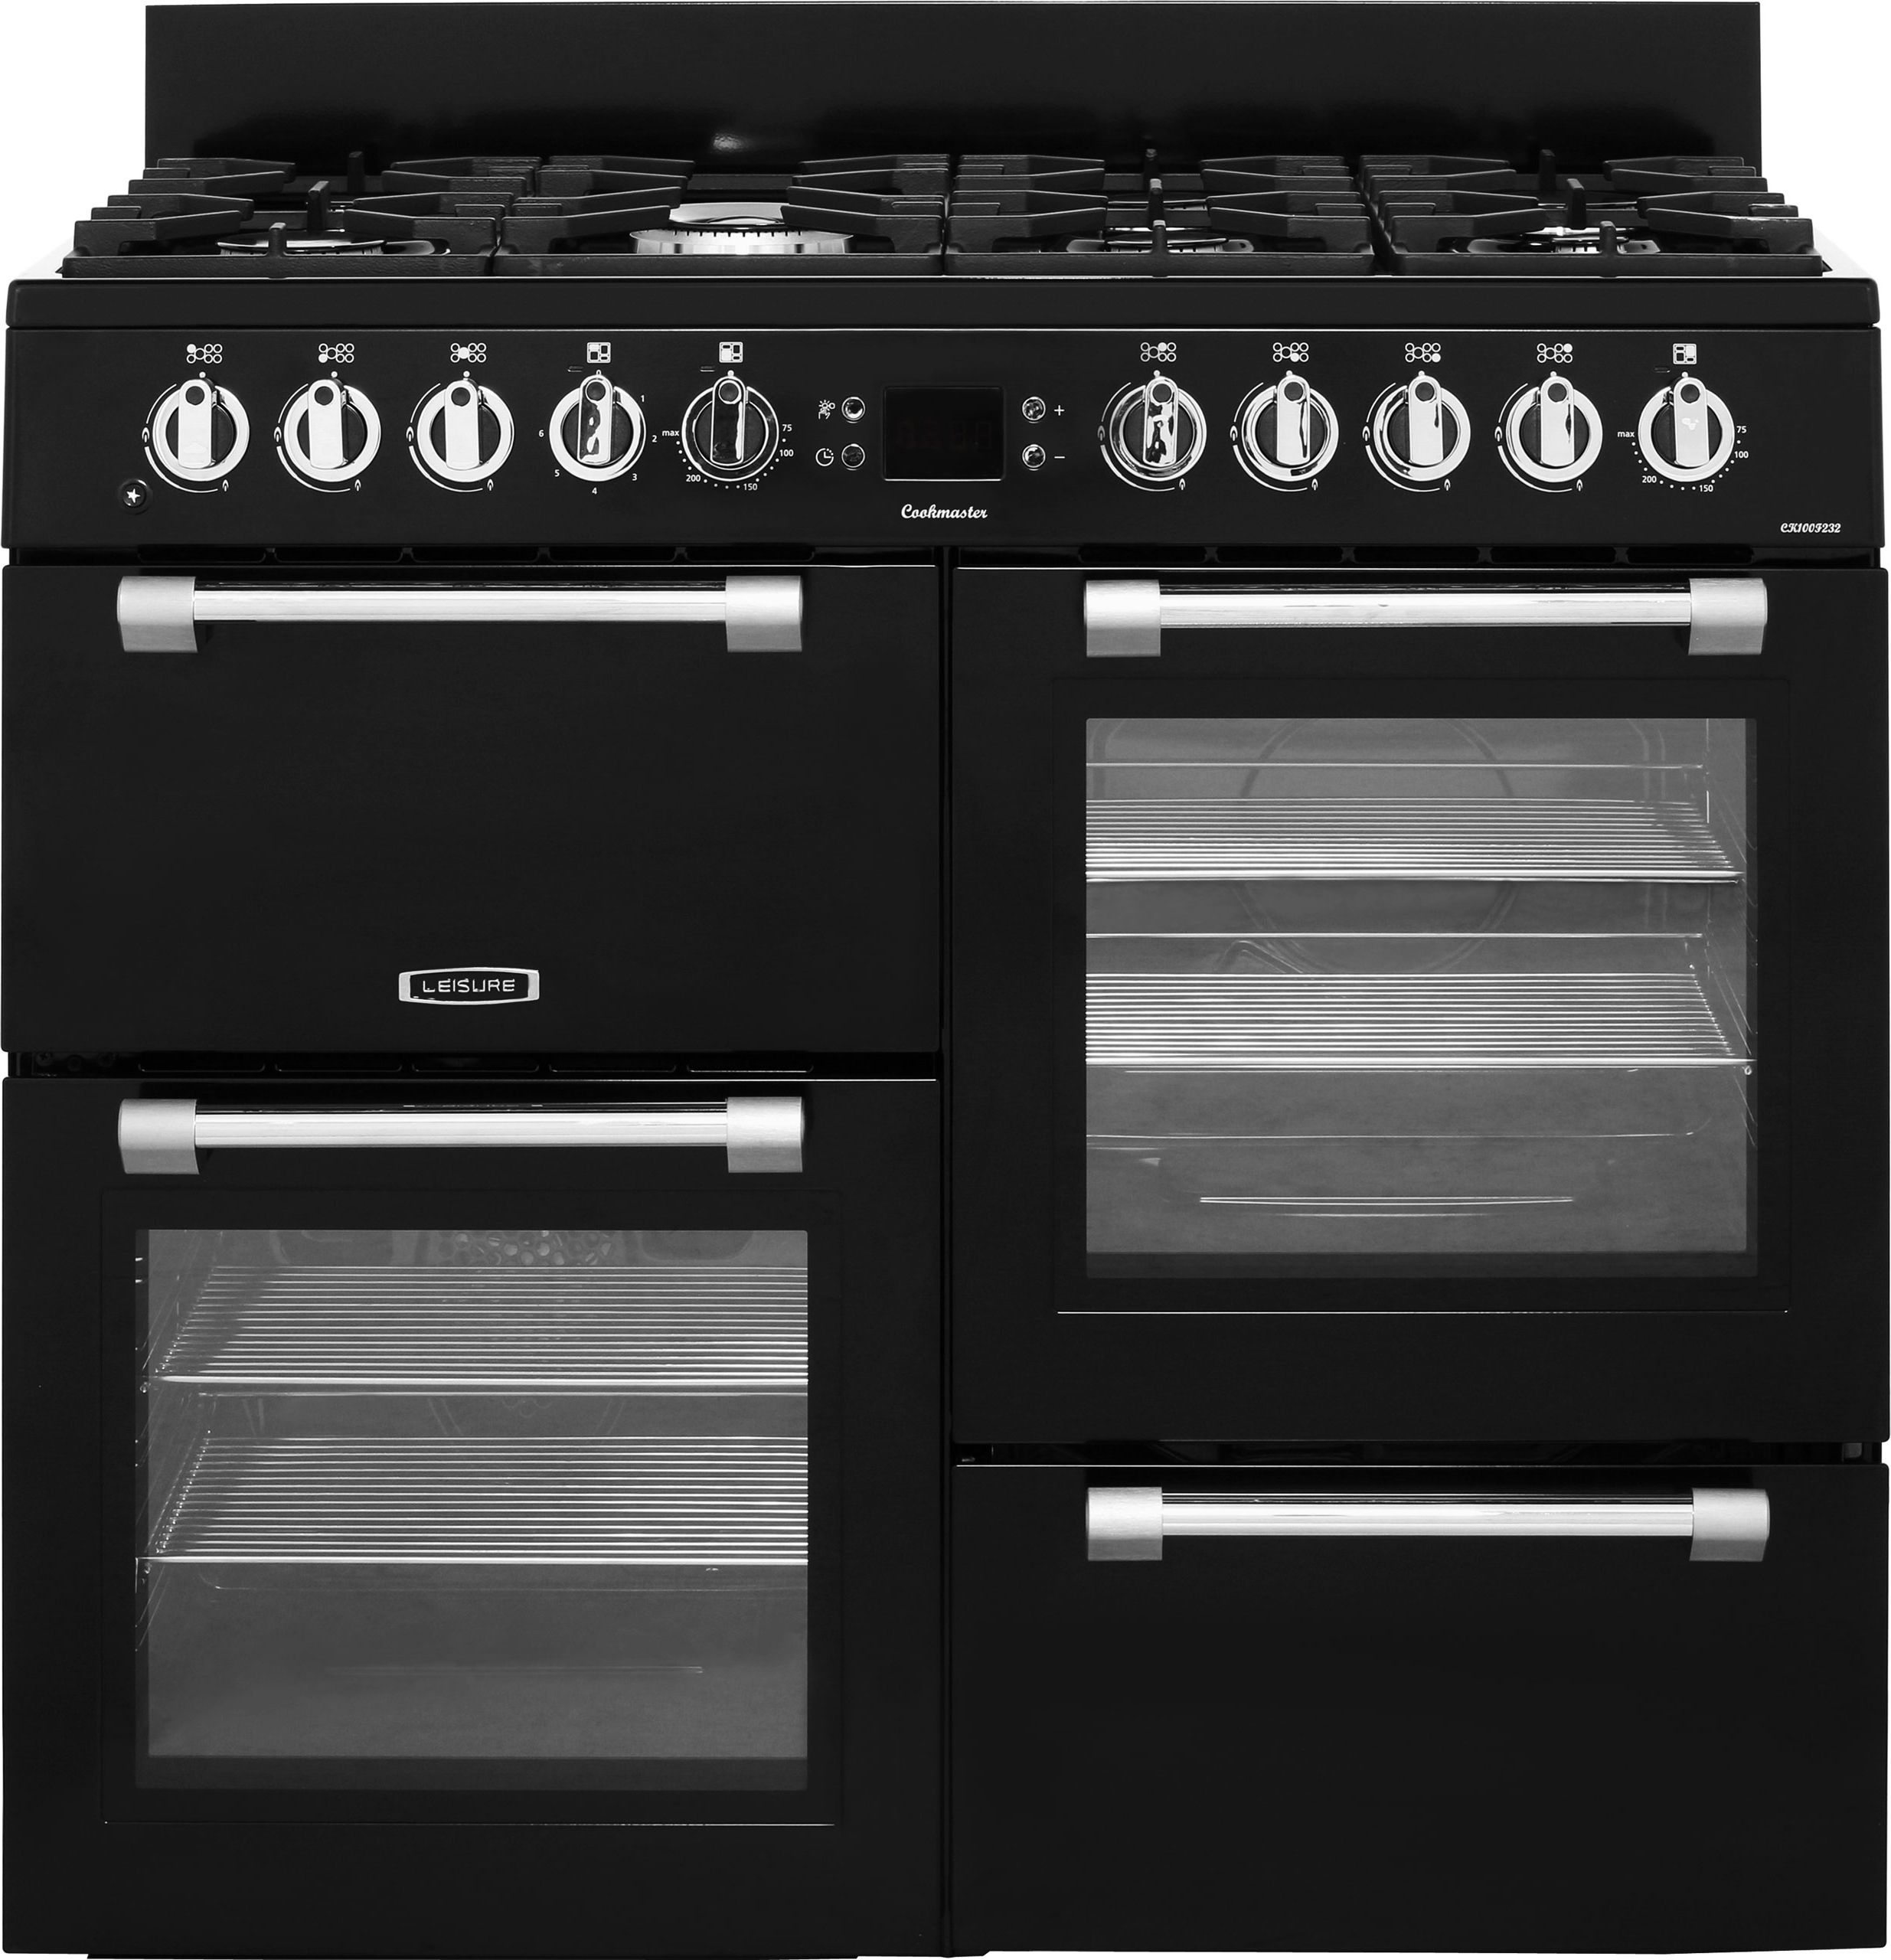 Leisure Cookmaster 100 CK100F232K 100cm Dual Fuel Range Cooker - Black - A/A Rated, Black